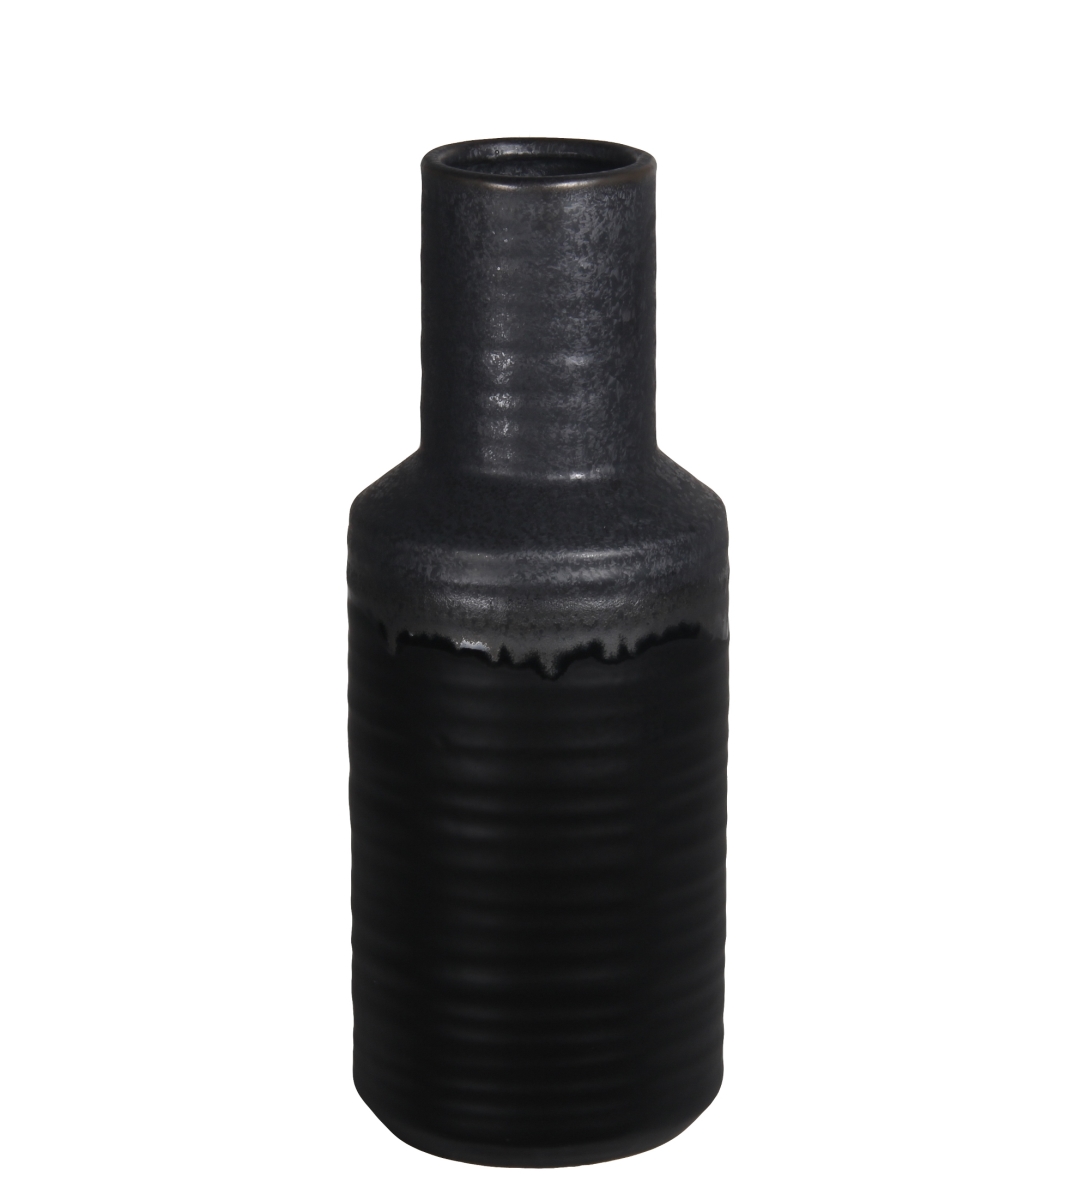 78213 6 X 6 X 13 In. Contemporary Ceramic Vase, Black & Grey - Small